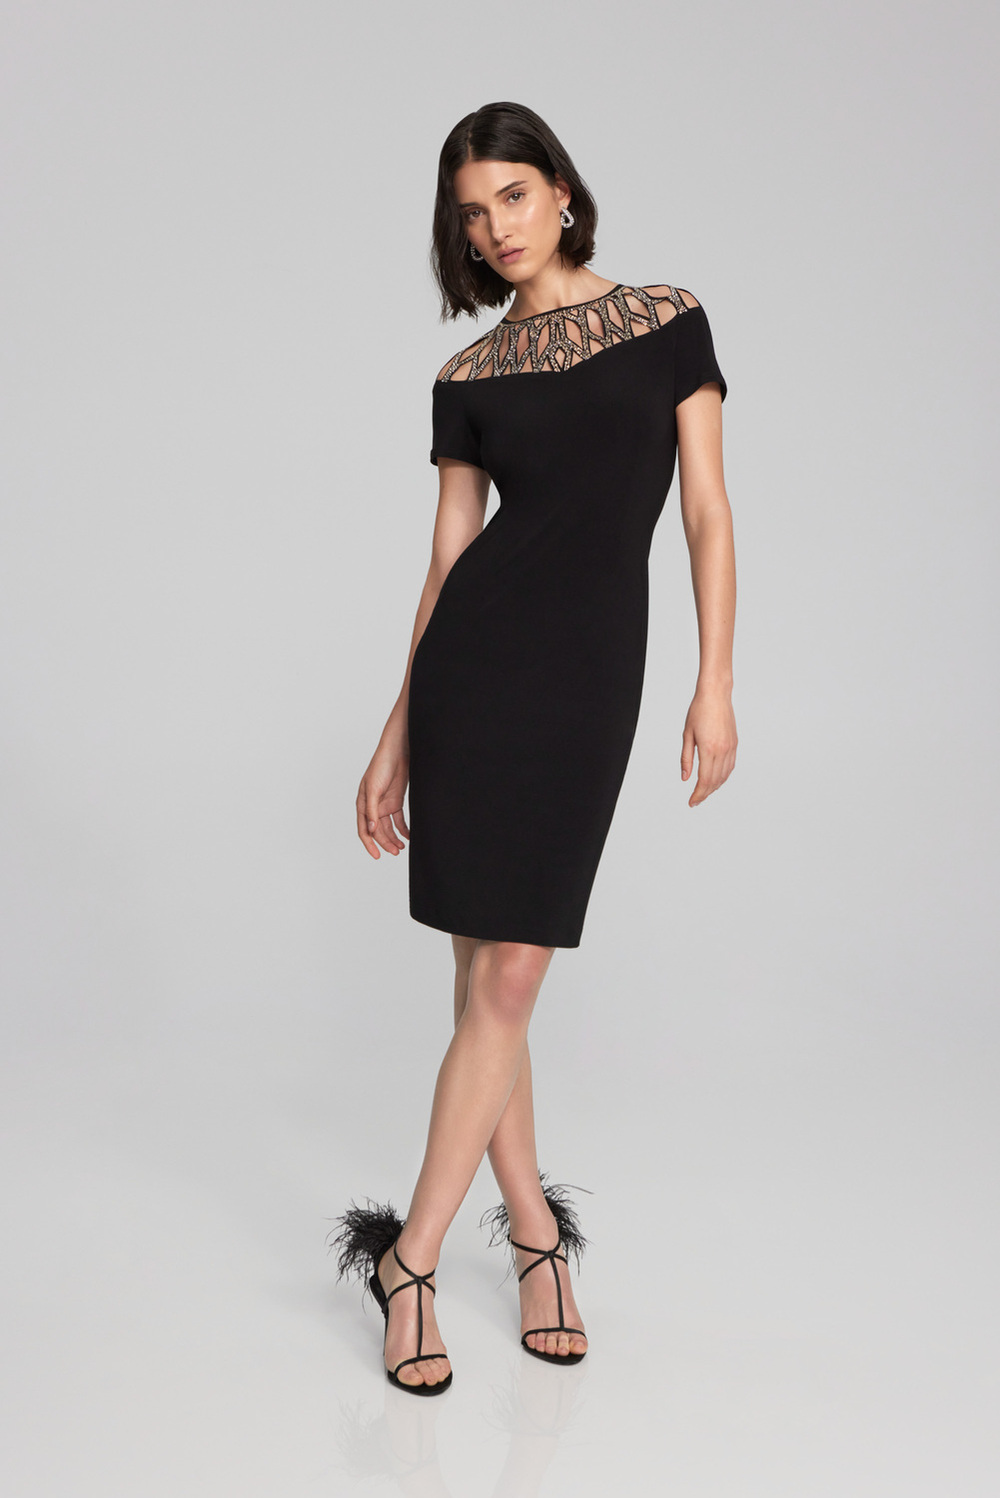 Beaded Detail Neckline Dress Style 241716. Black